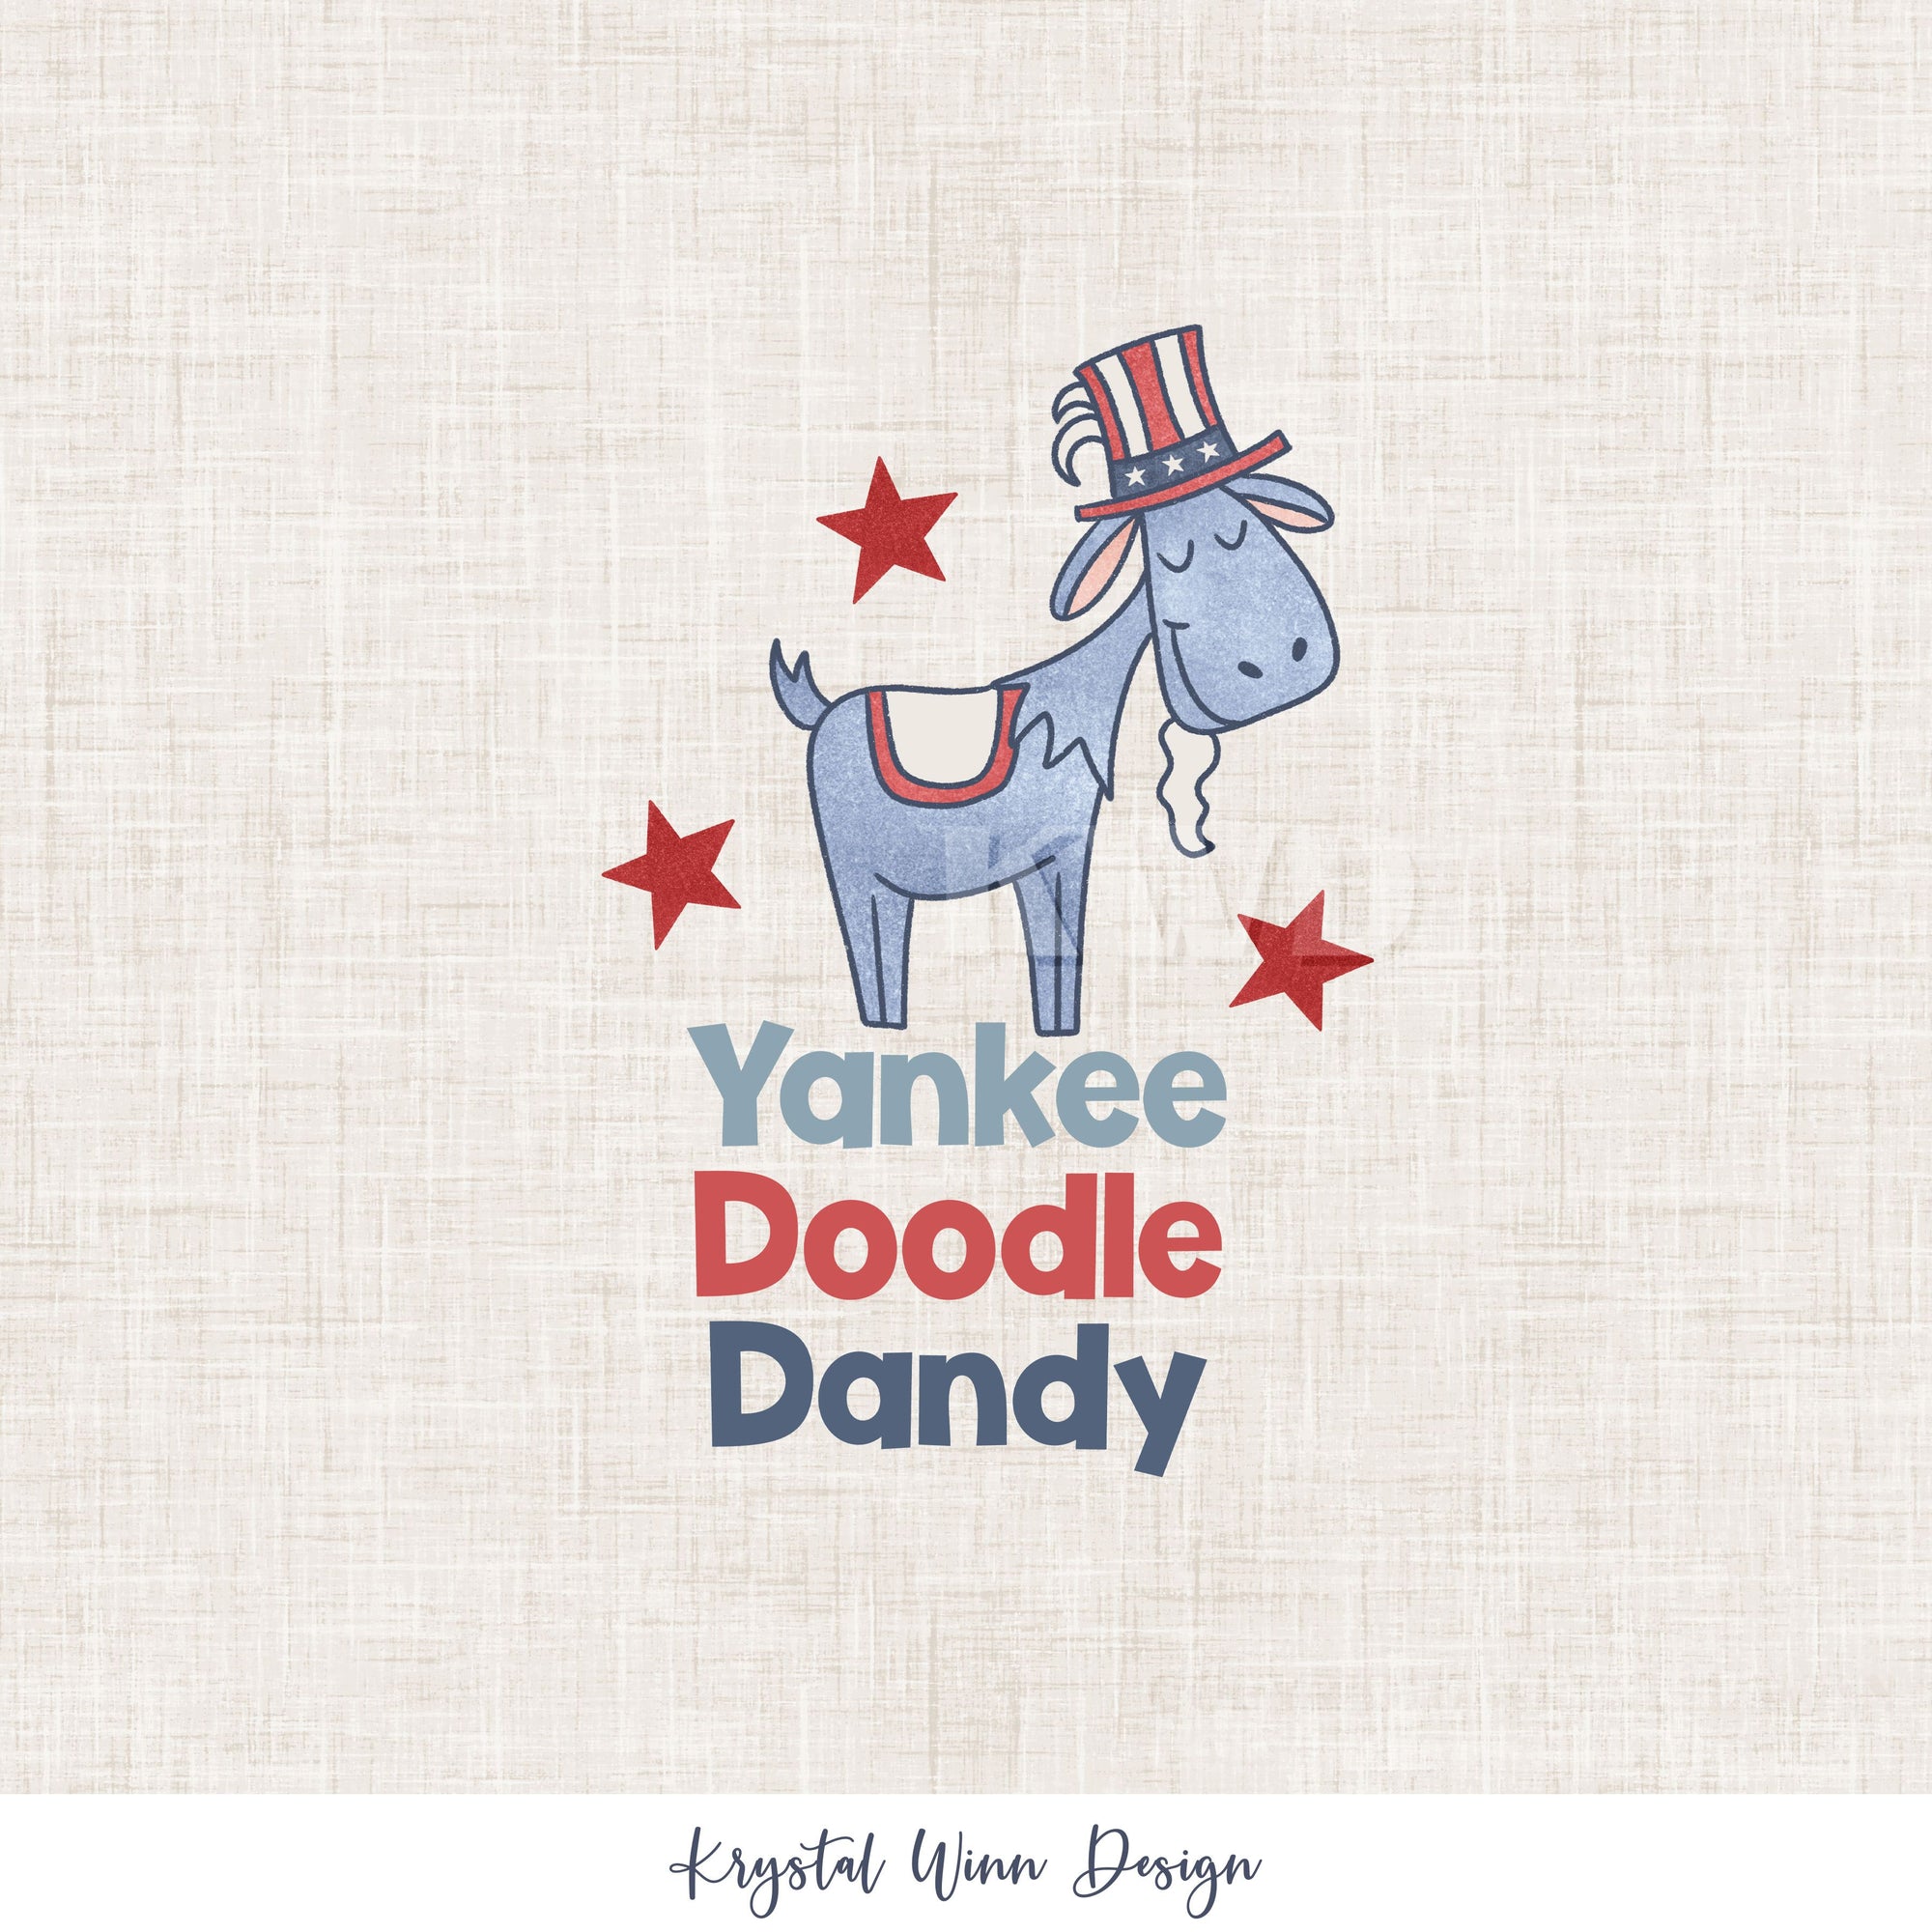 Yankee Doodle Dandy panel